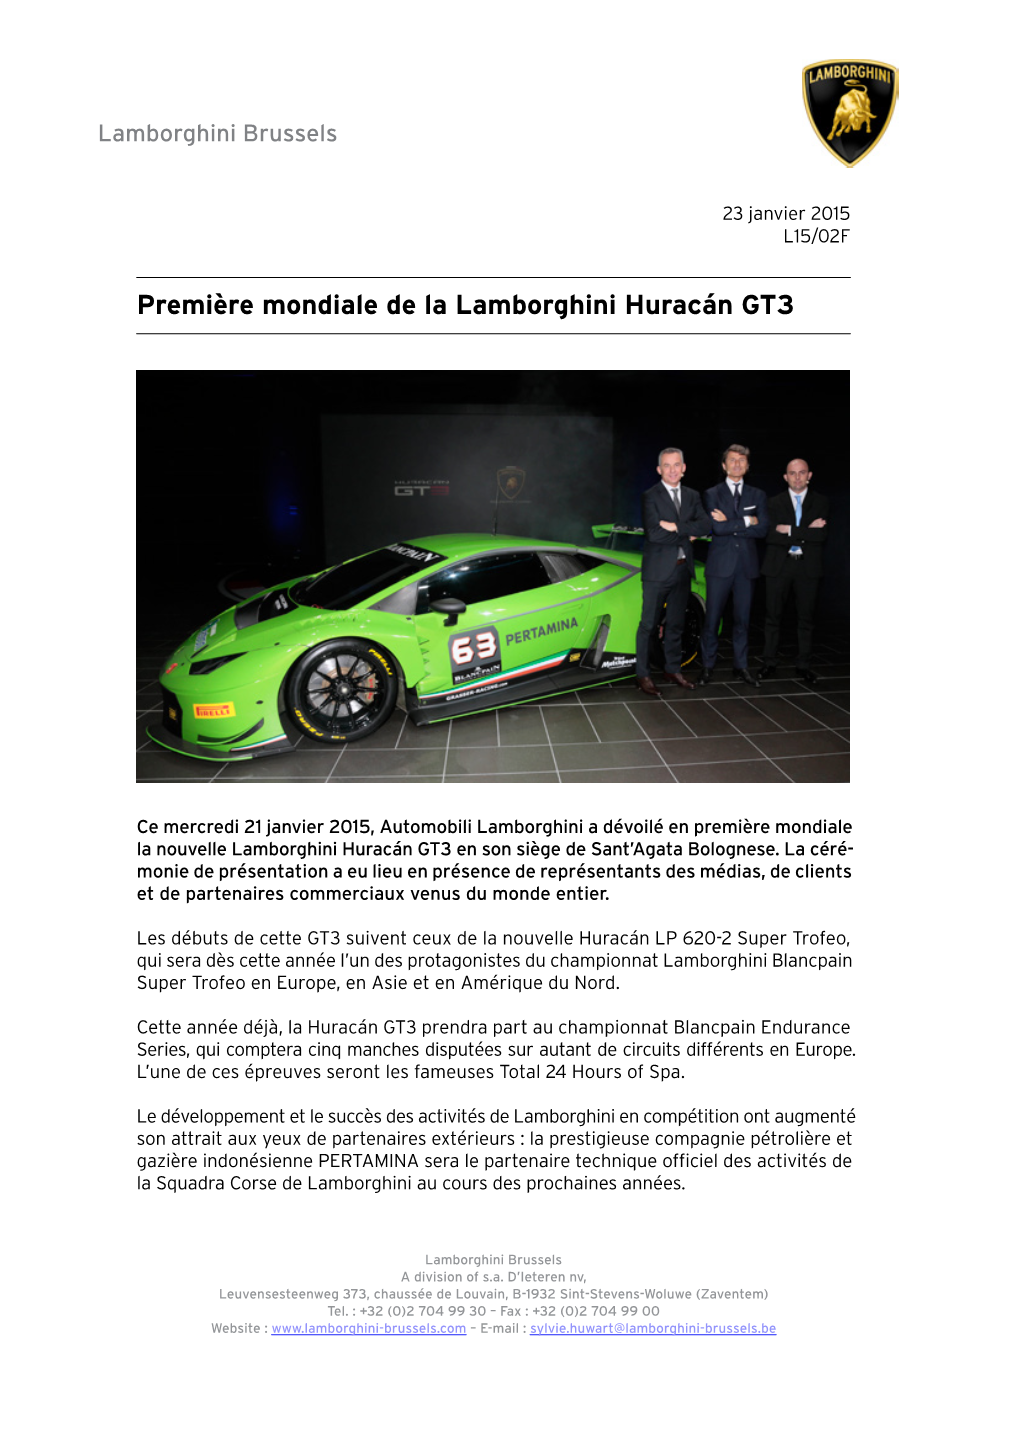 Première Mondiale De La Lamborghini Huracán GT3